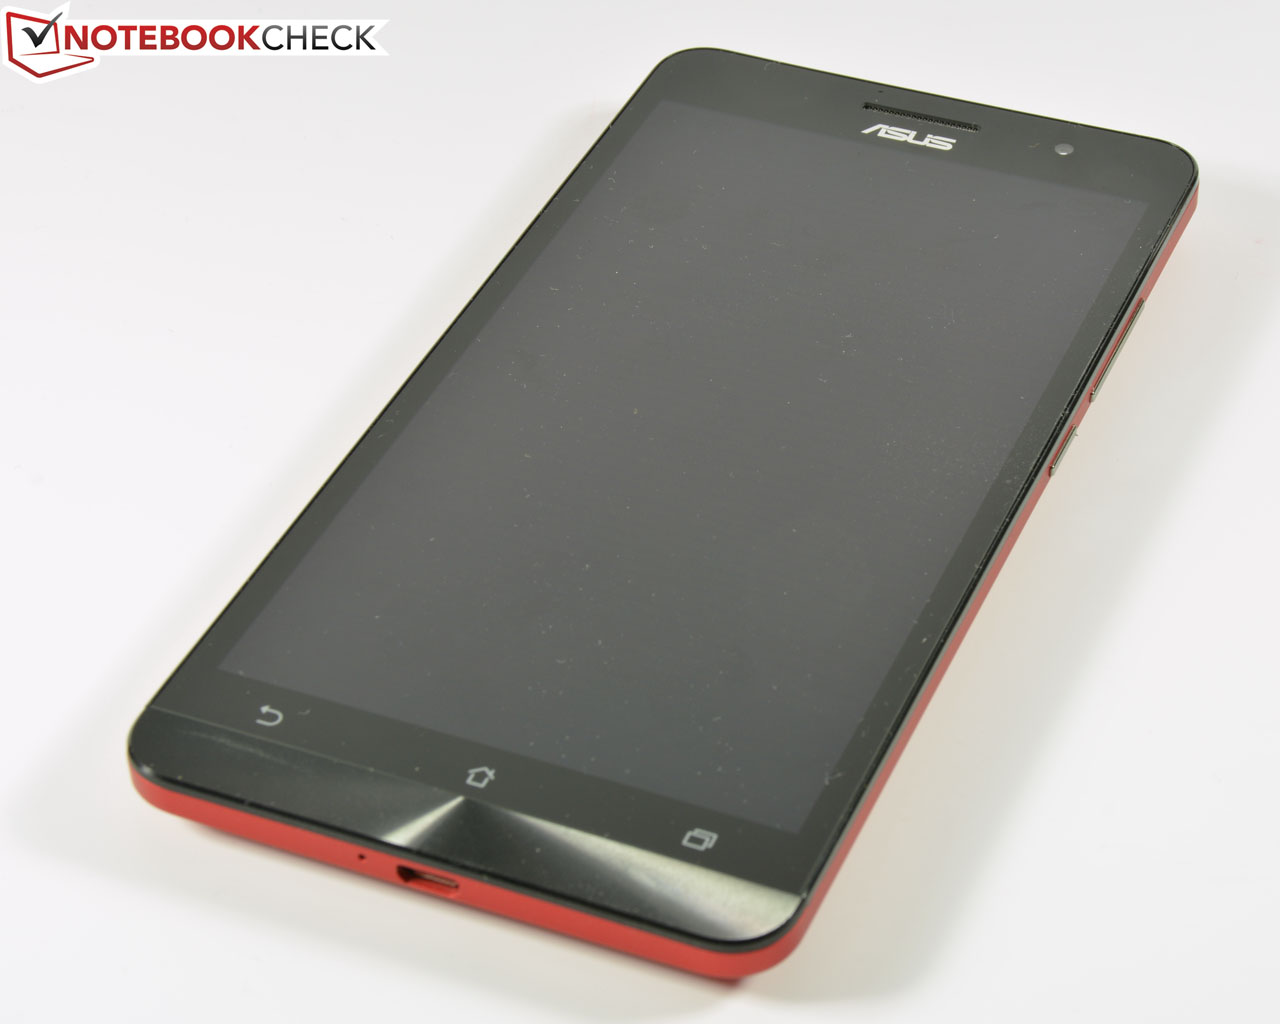 Asus Zenfone 6 A600CG Smartphone Review - NotebookCheck.net Reviews